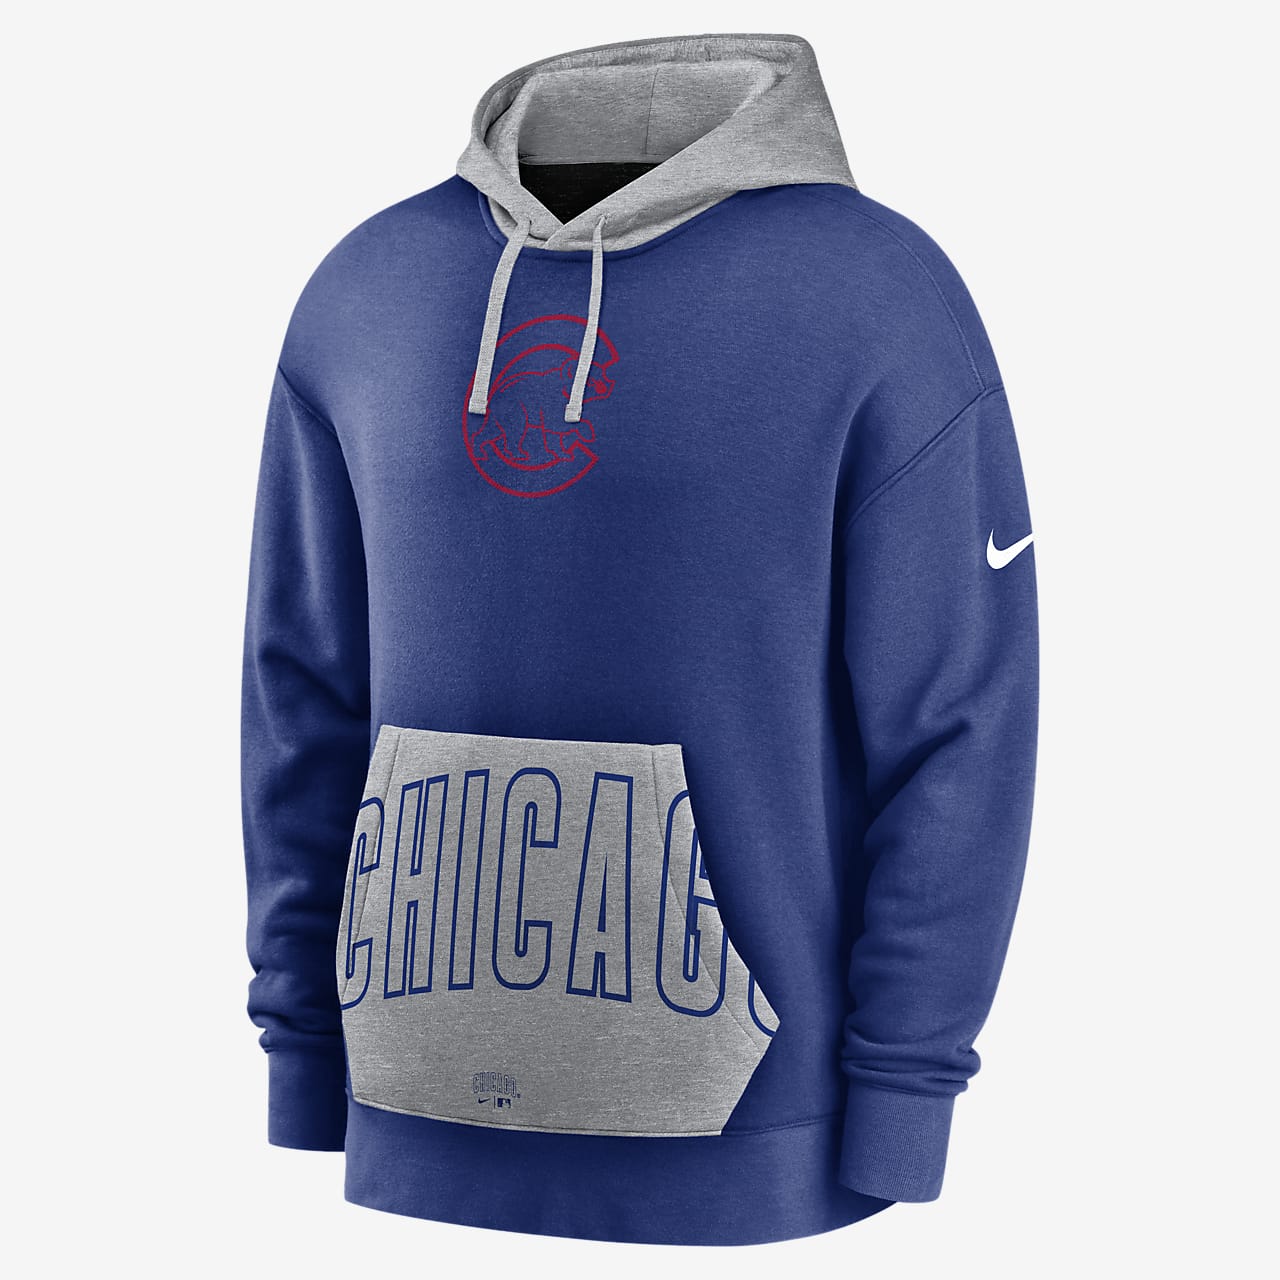 Nike Crop Pocket Heritage (MLB Chicago Cubs) Men's Pullover Hoodie